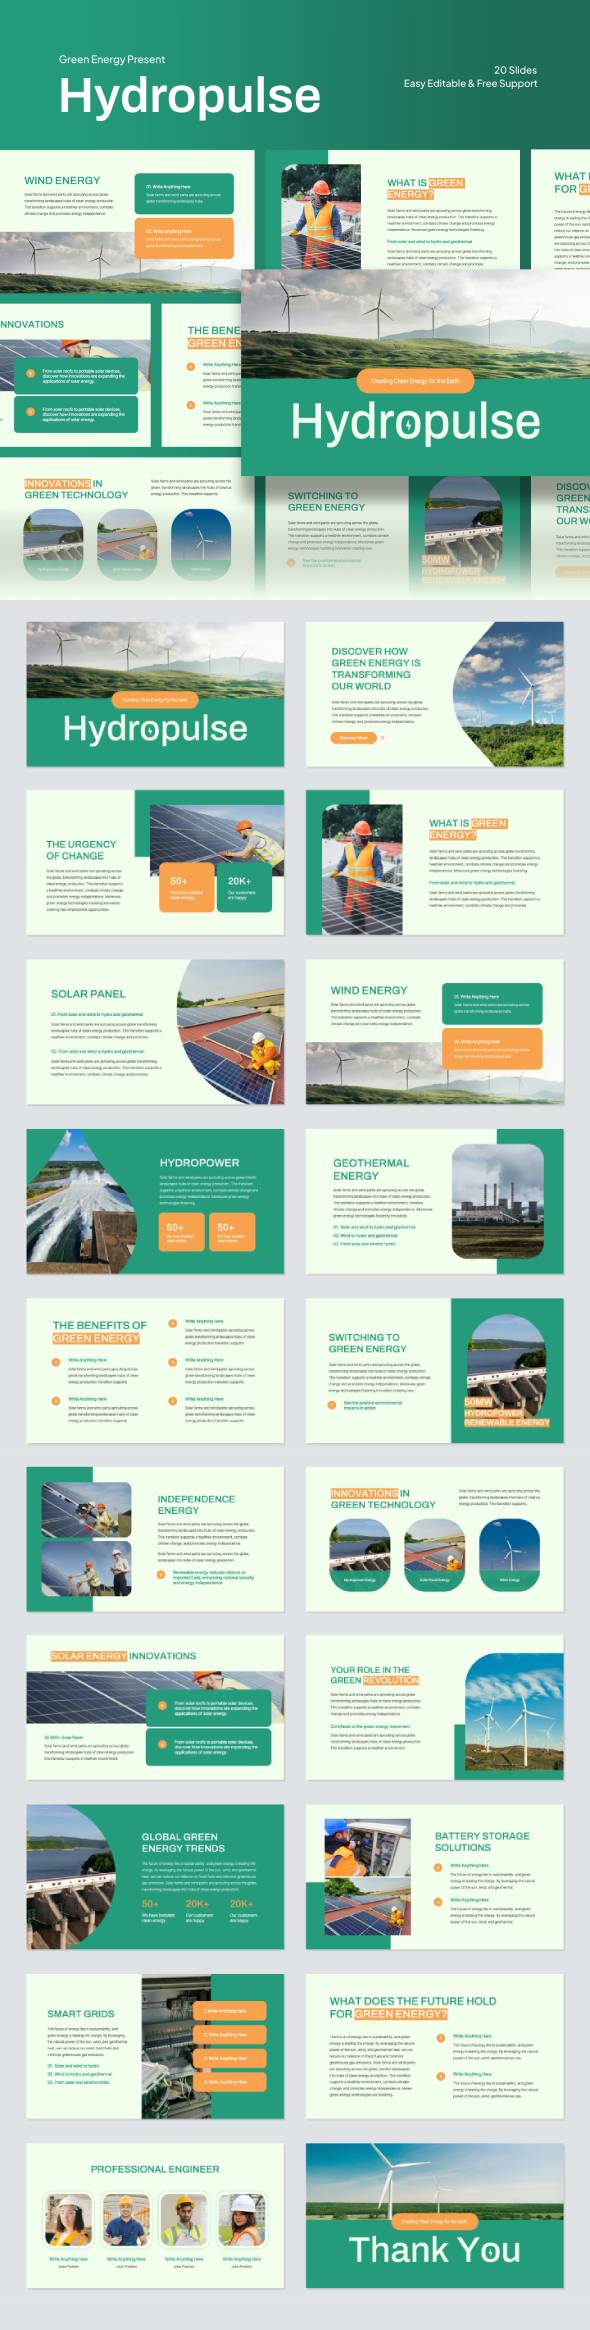 [DOWNLOAD]Hydropulse - Green Energy PowerPoint Template